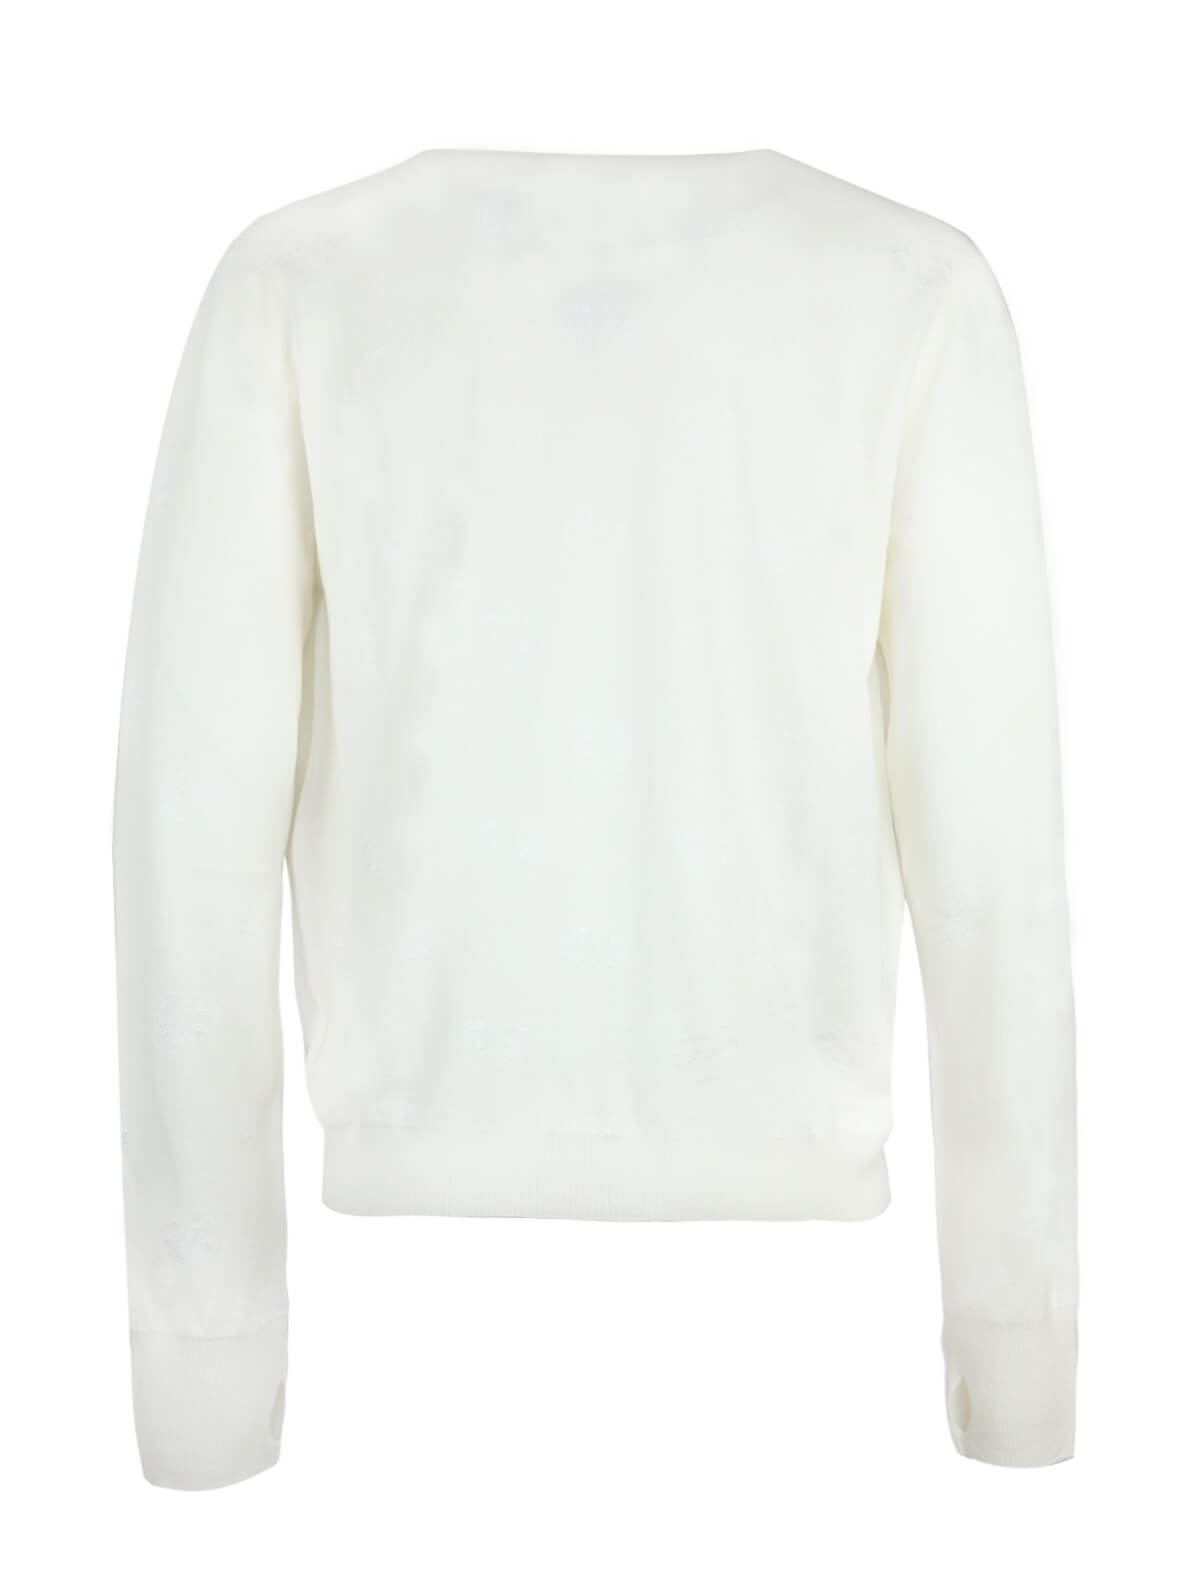 GABRIELE PASINI Knitted Wool-Blend Cardigan in White